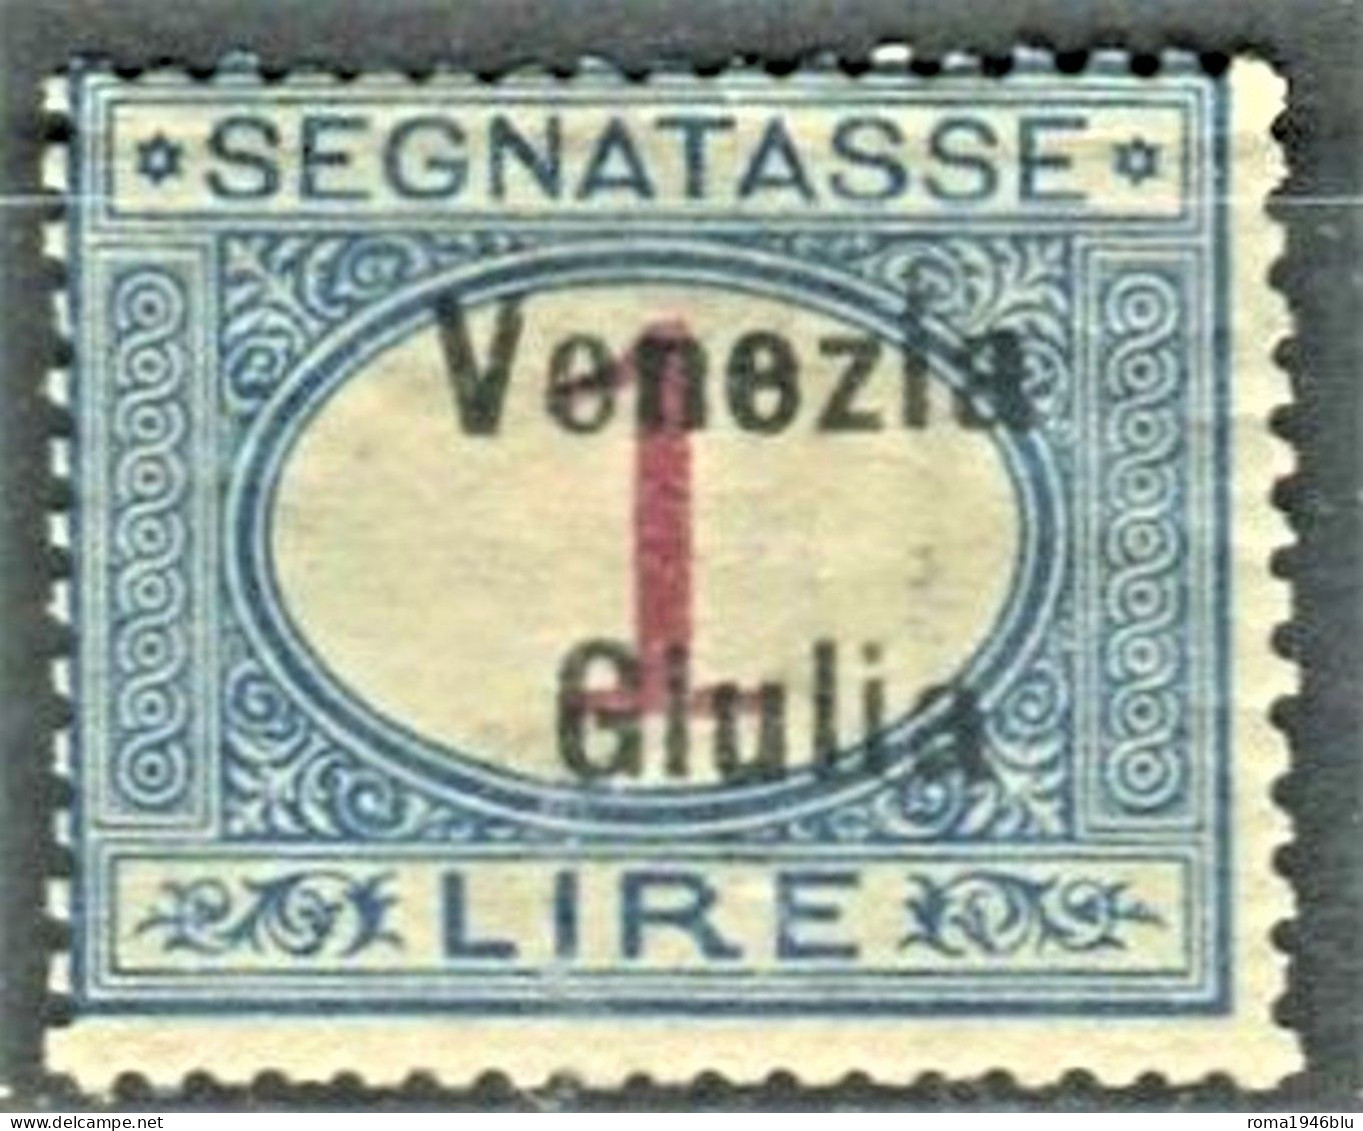 VENEZIA GIULIA 1918  SEGNATASSE 1 LIRA * GOMMA ORIGINALE FIRMATA - Venezia Giulia